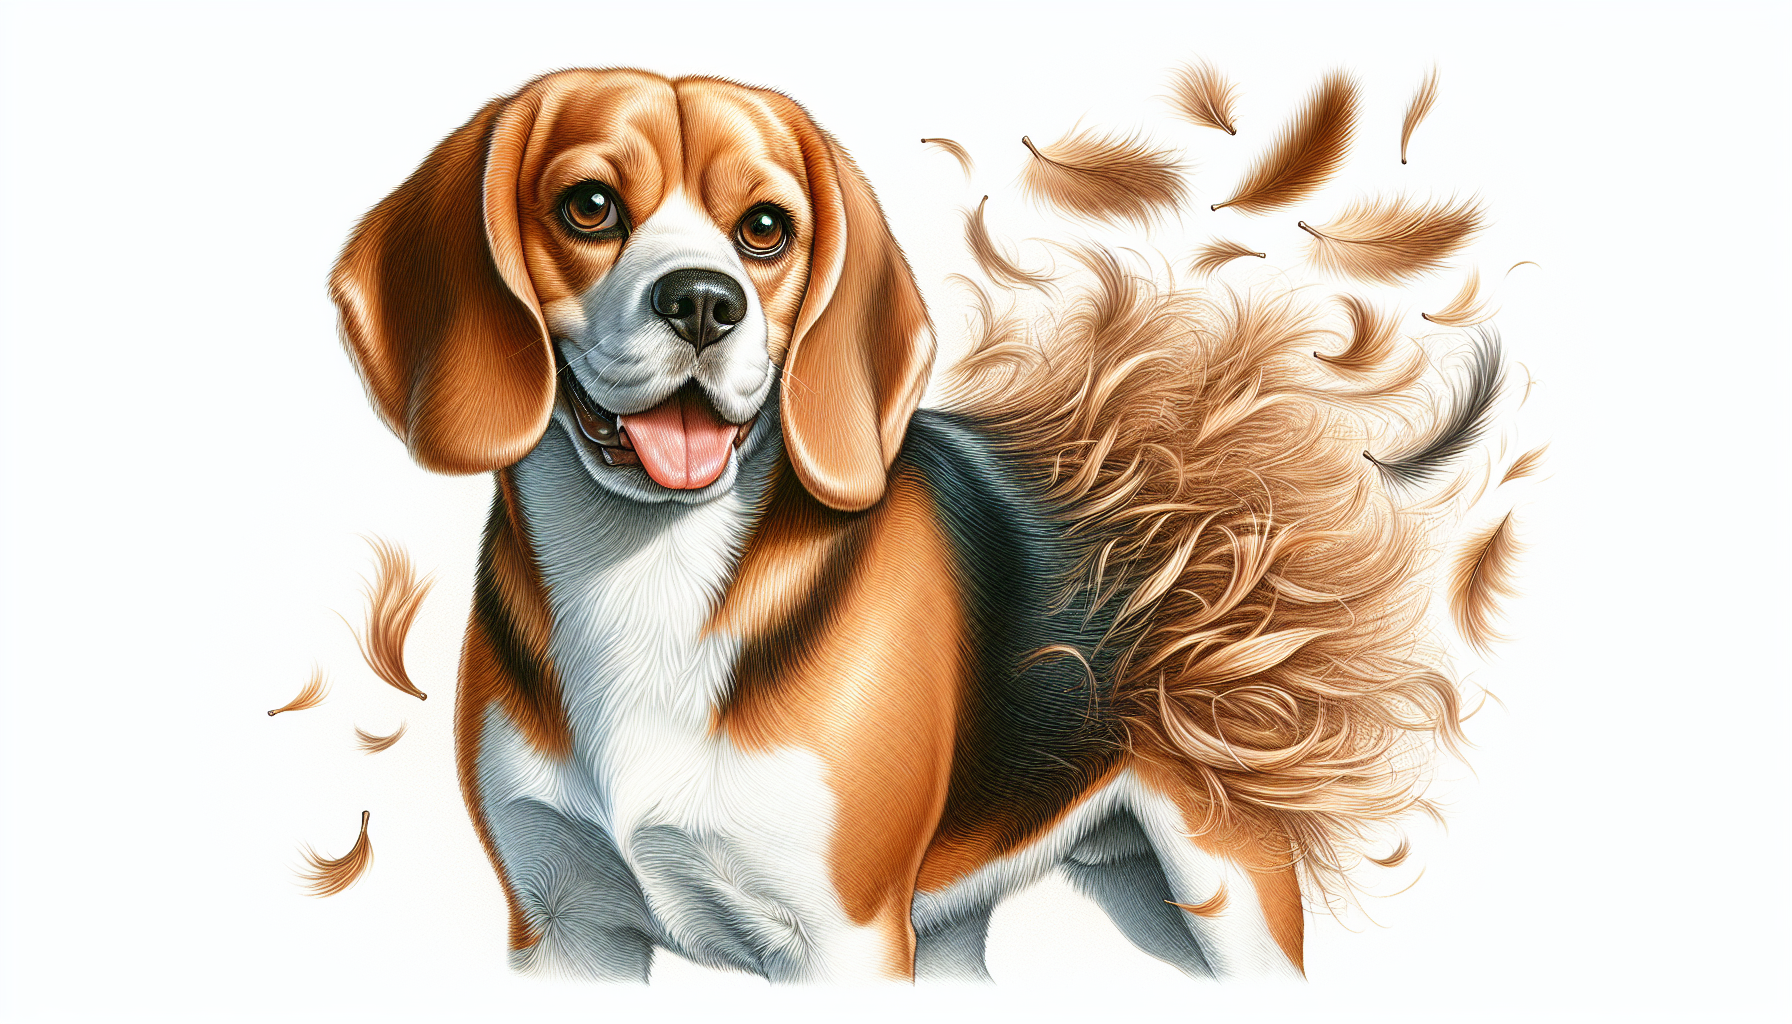 Beagle shedding its fur